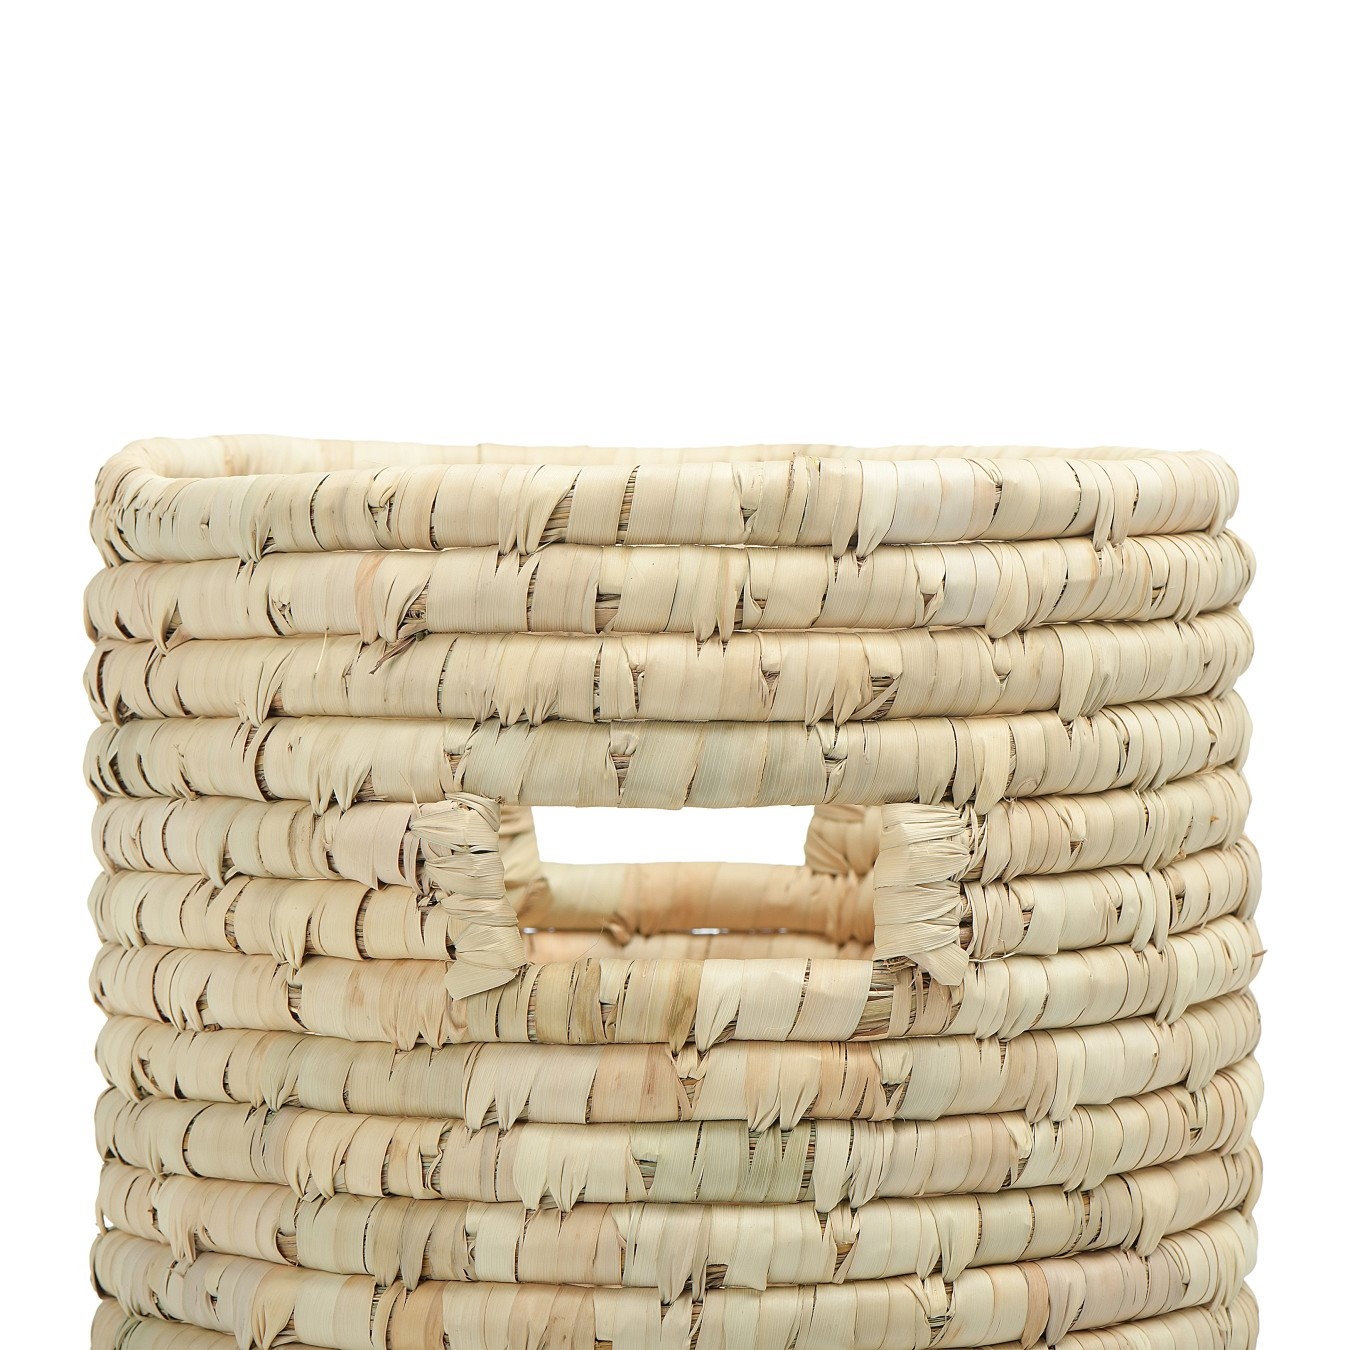 Natural Grass Baskets, Set of 3 - Image 3